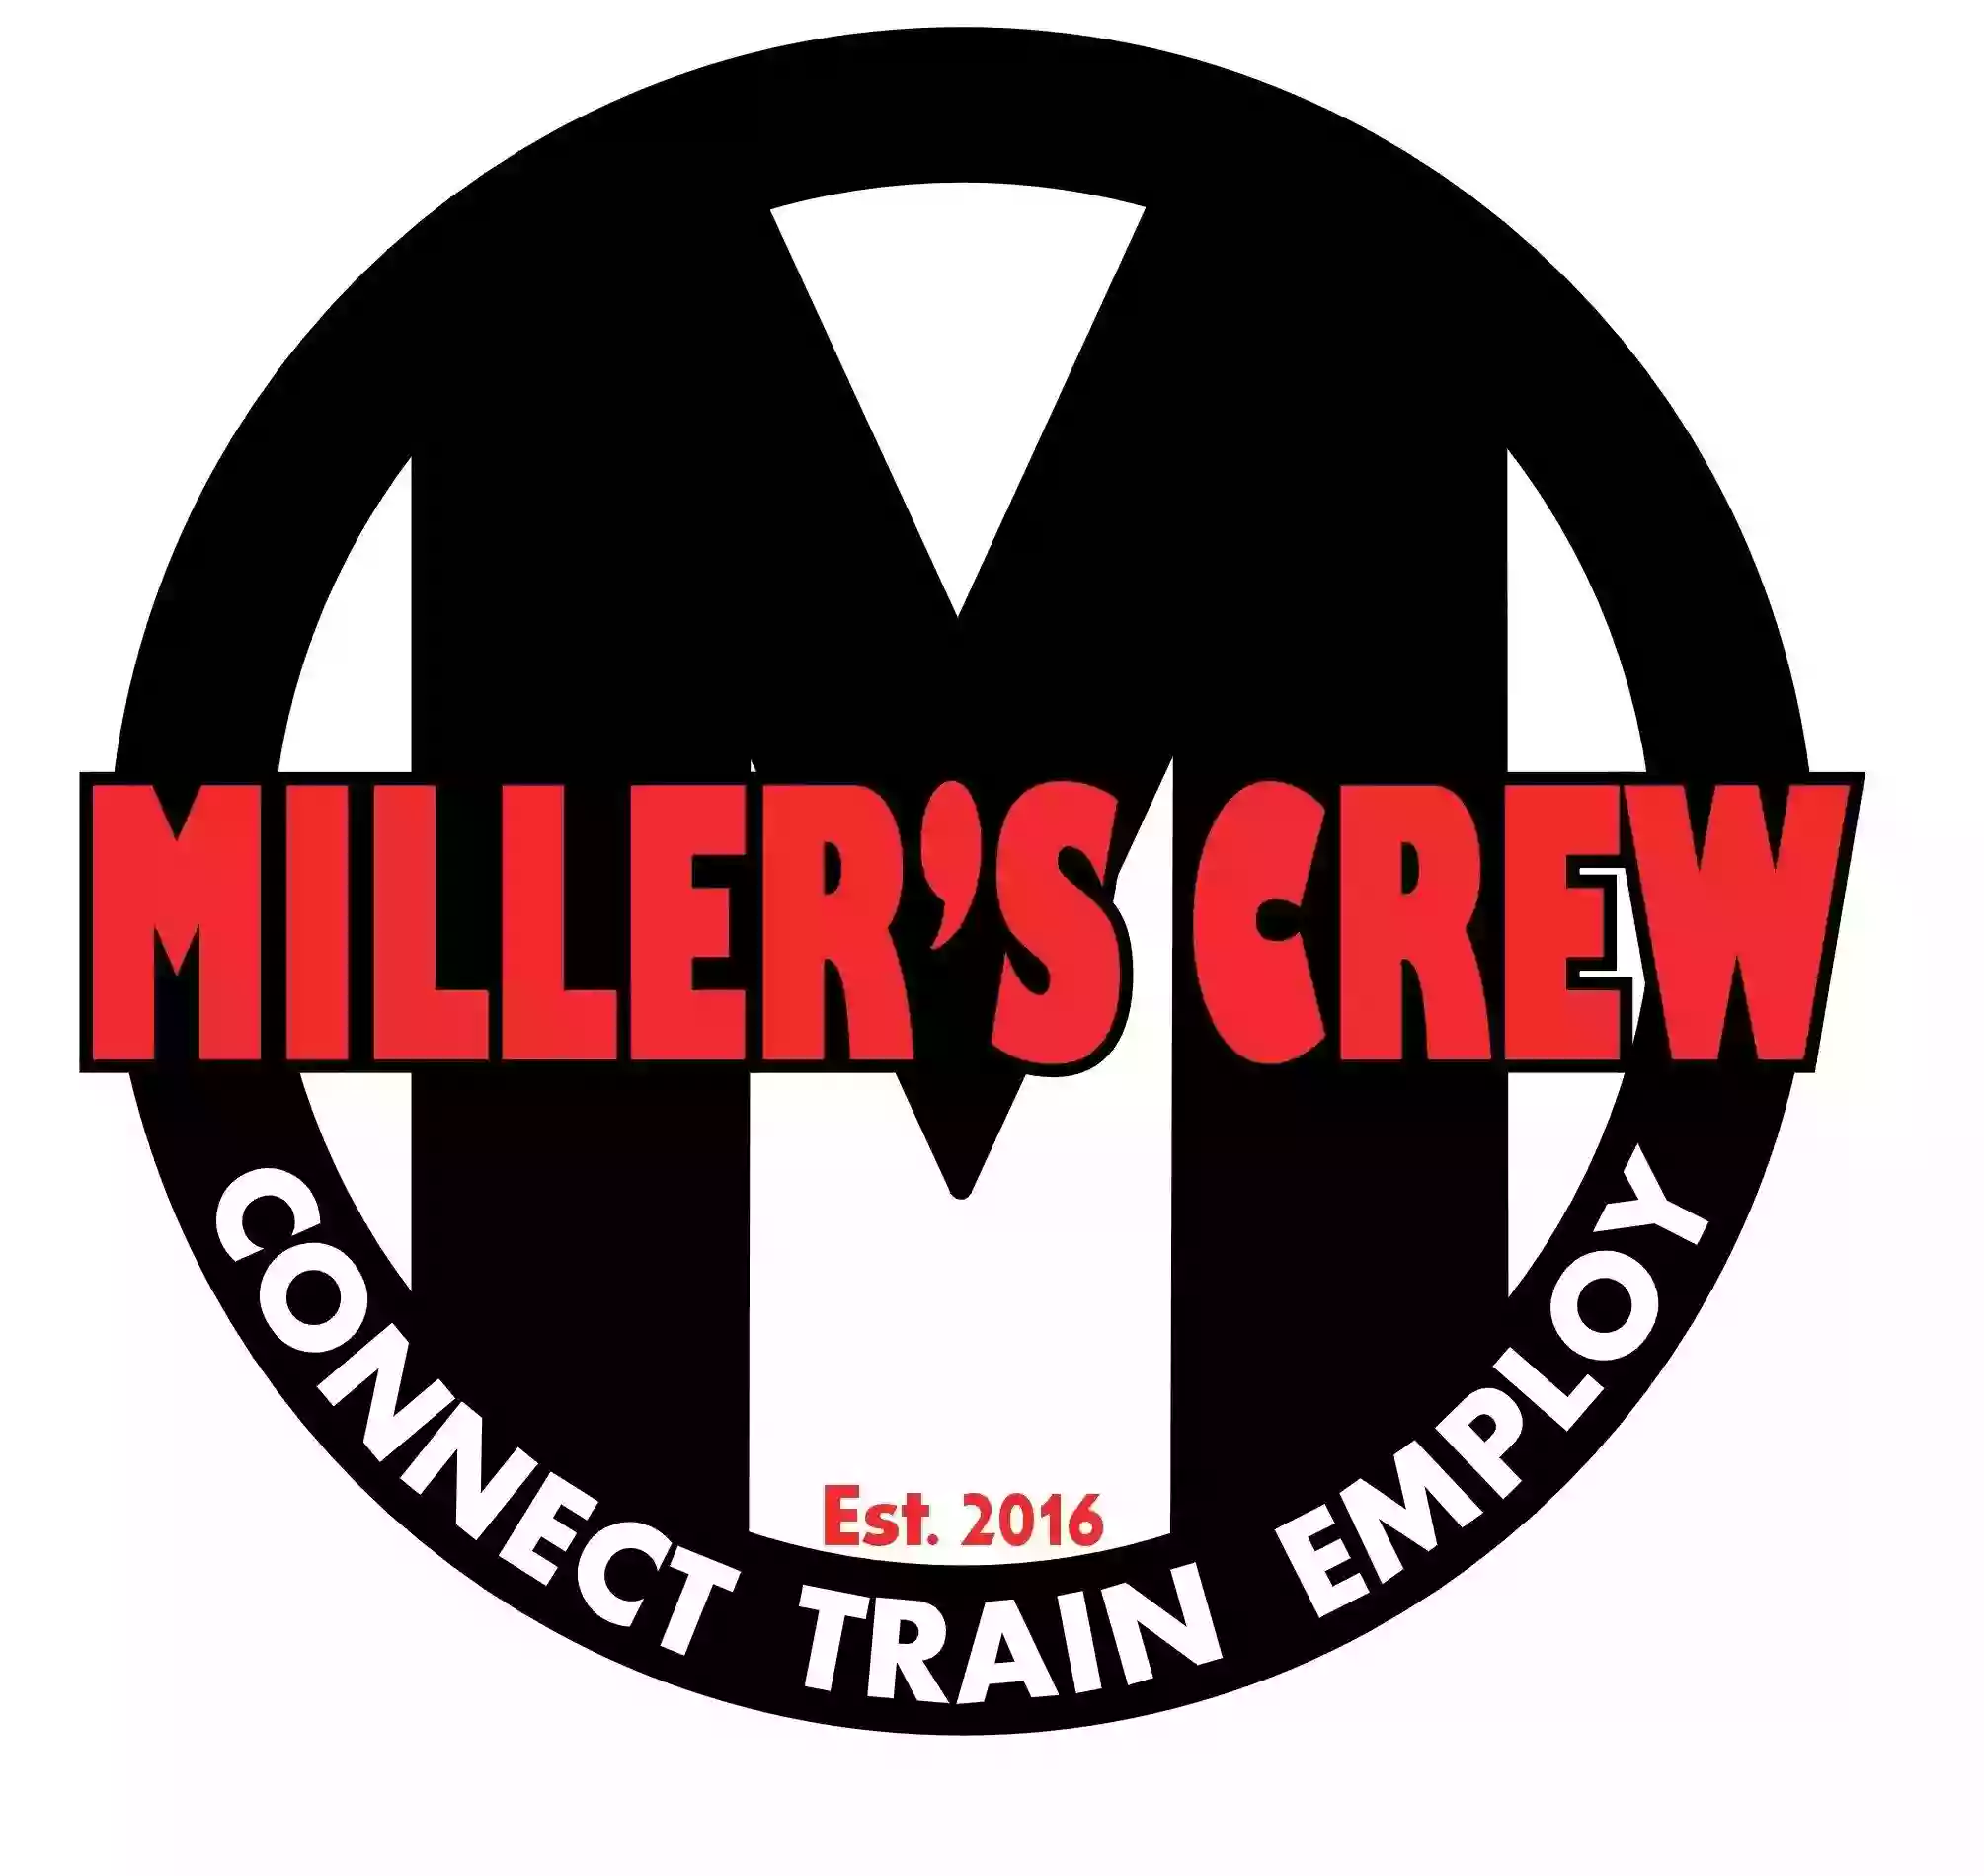 Miller's Brew Coffee Shop